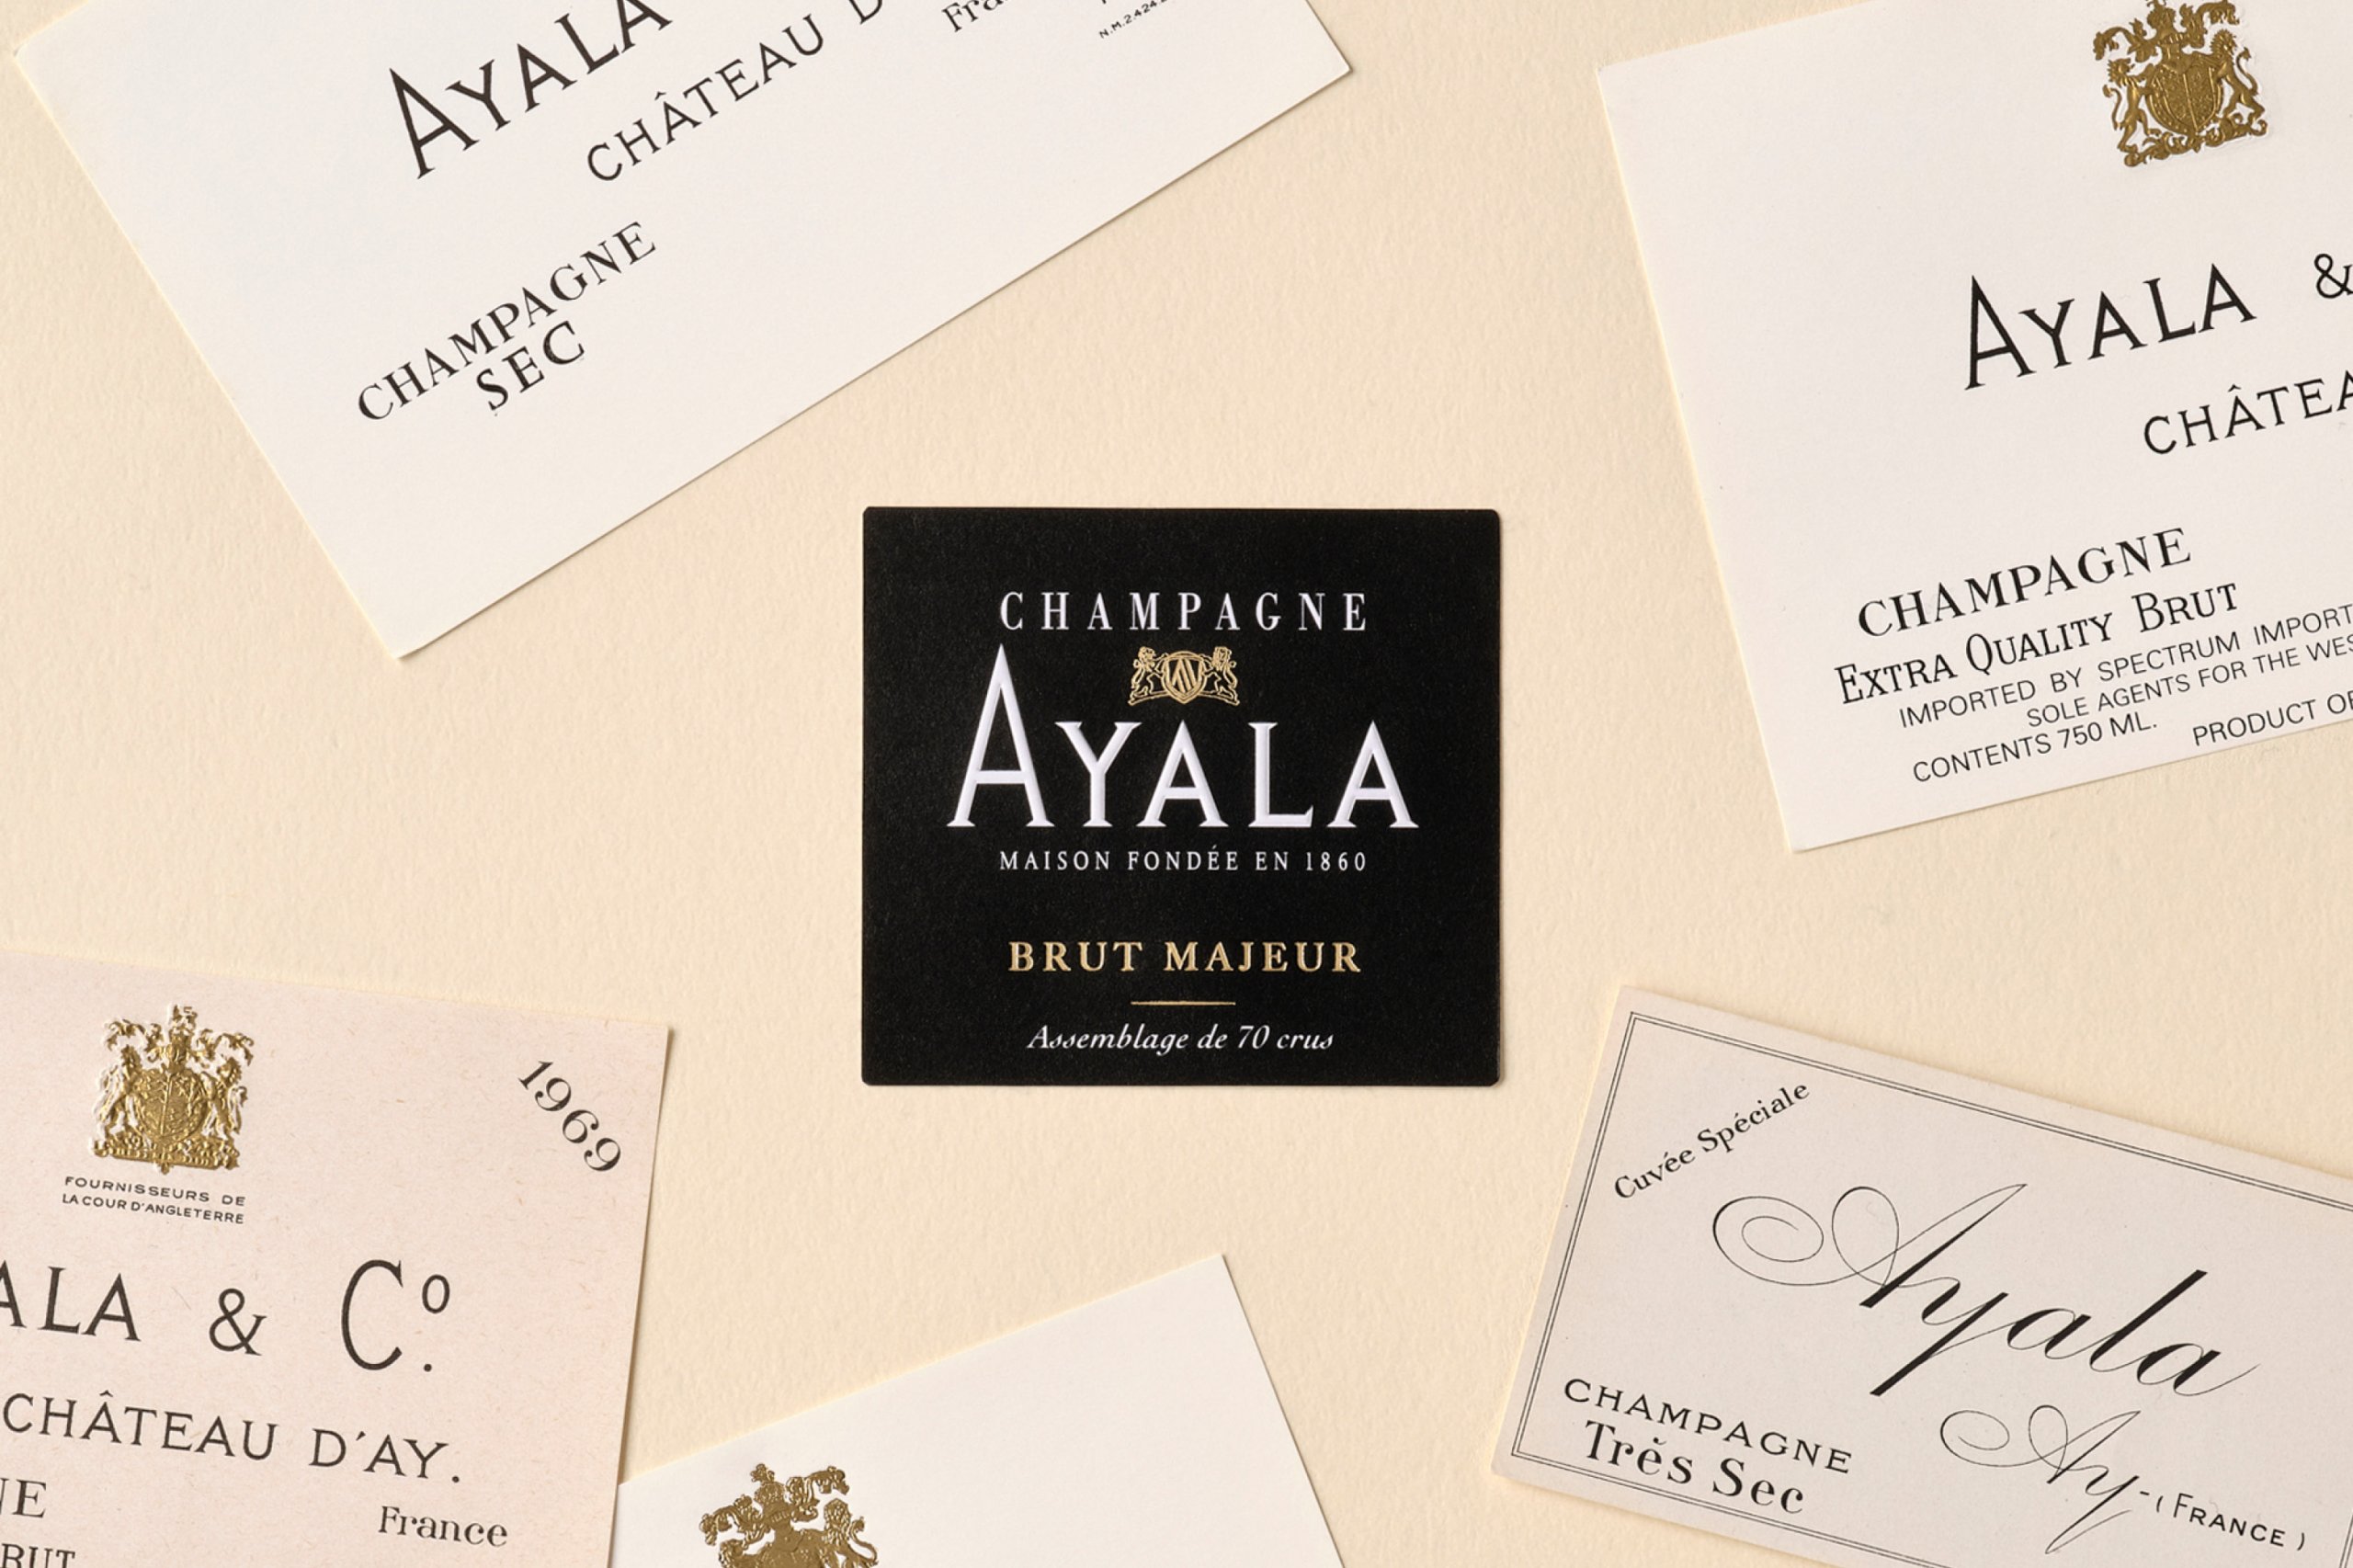 New Blend, New Bottle Shape - Champagne Ayala